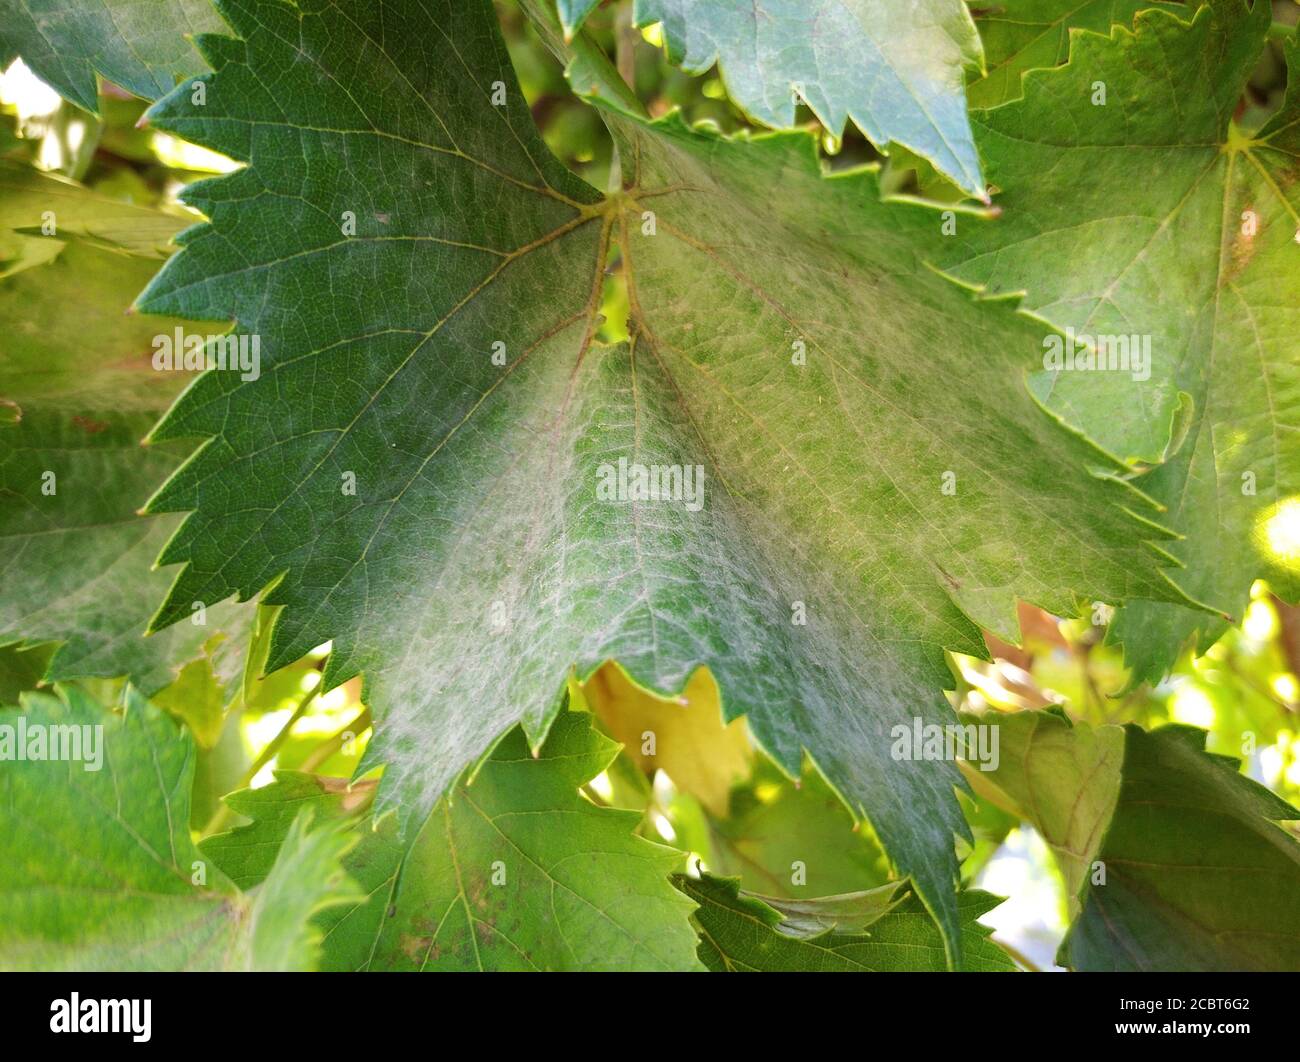 Grape disease plaque on leaves Stock Photo